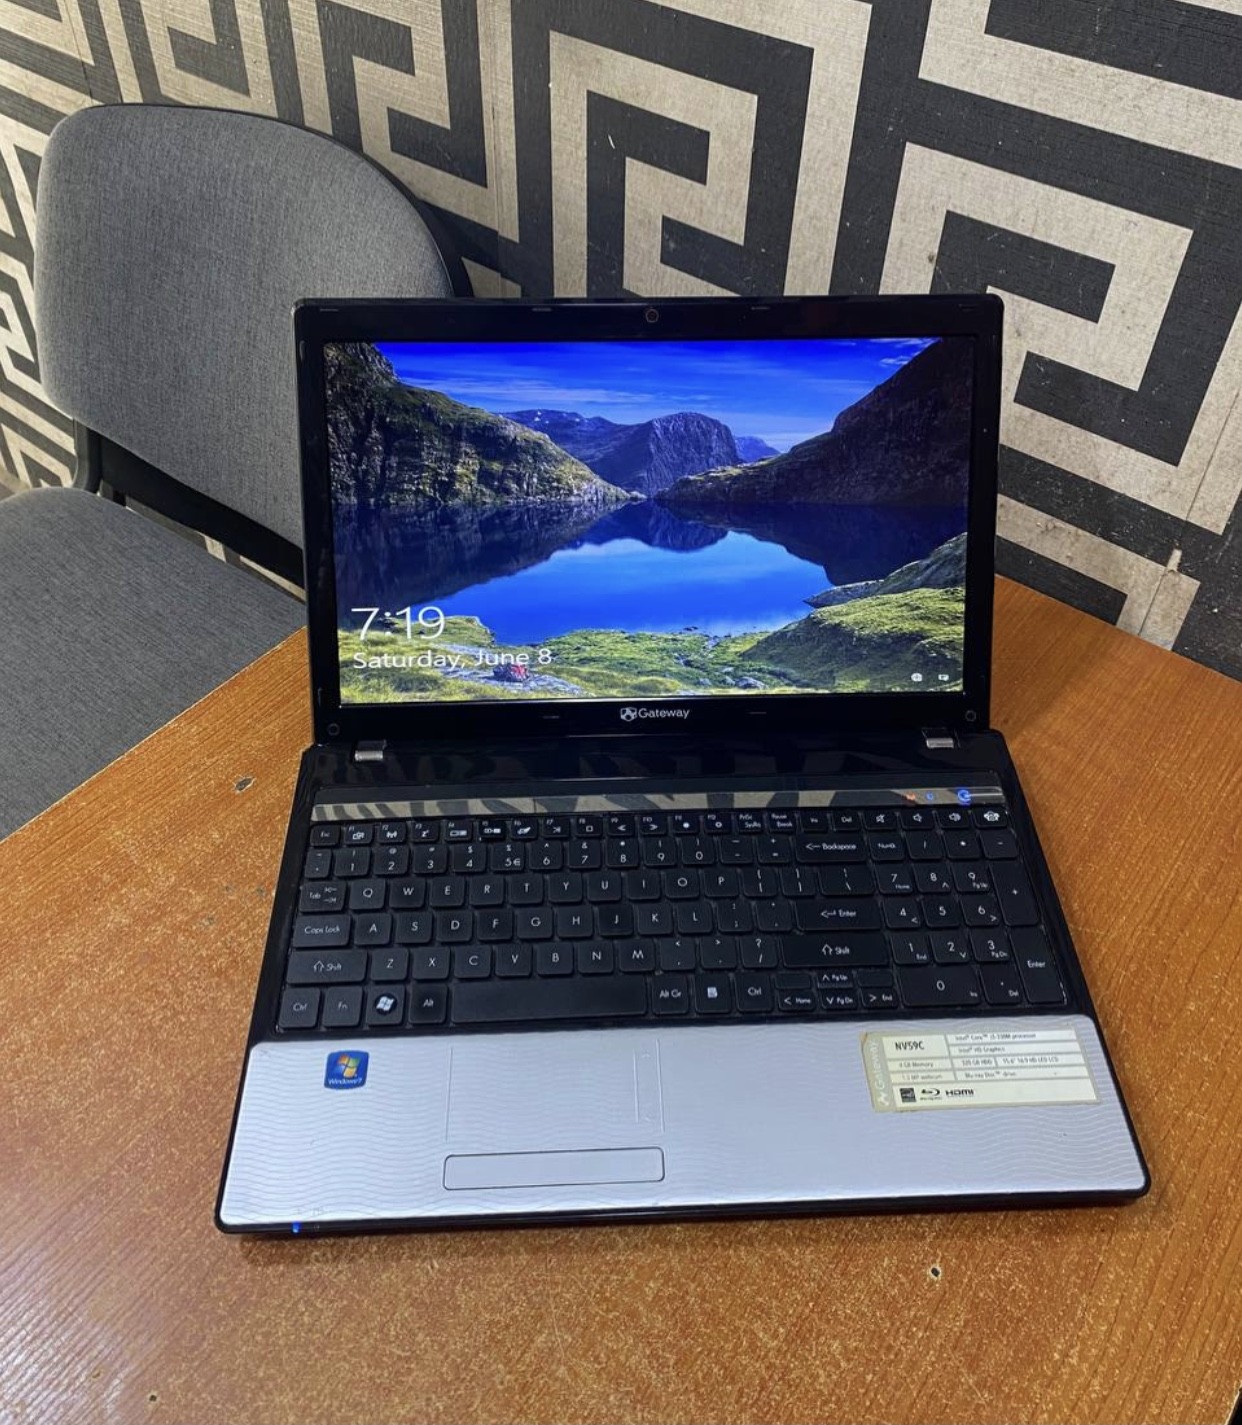 3Gb Ram, 120Gb Hdd, Corei3, 2-3Hours Ba3 Life, Gateway Laptop For-Sale